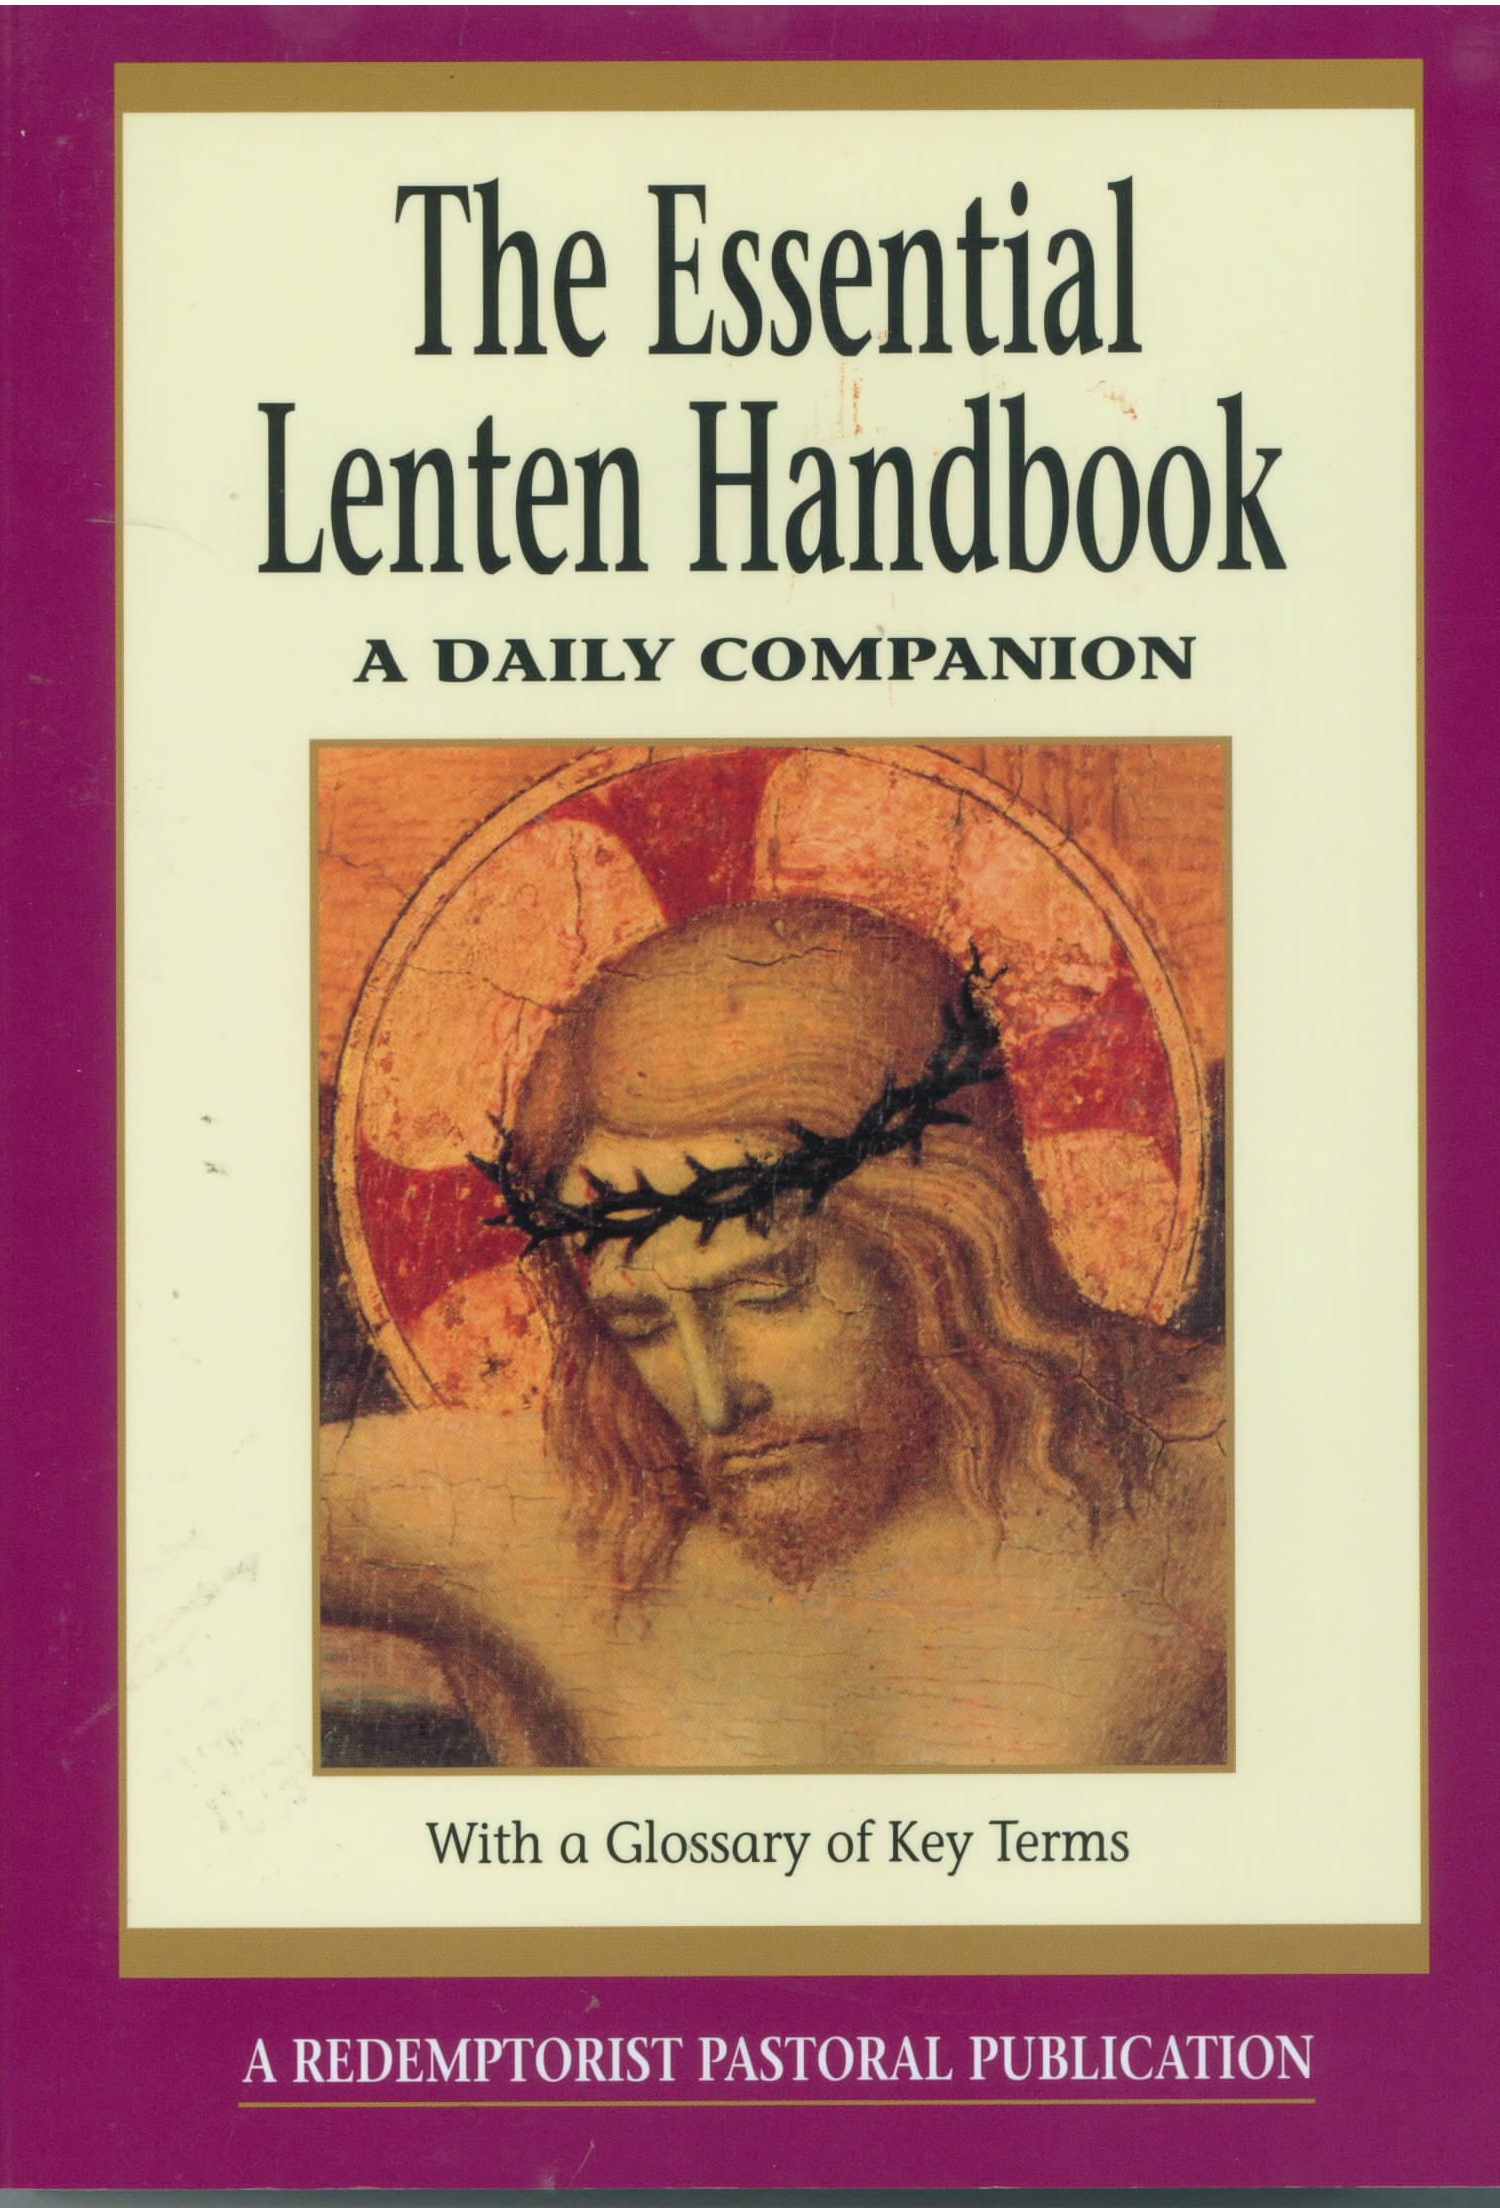 Essential Lenten Handbook A Daily Companion by Thomas Santa 9780764805677